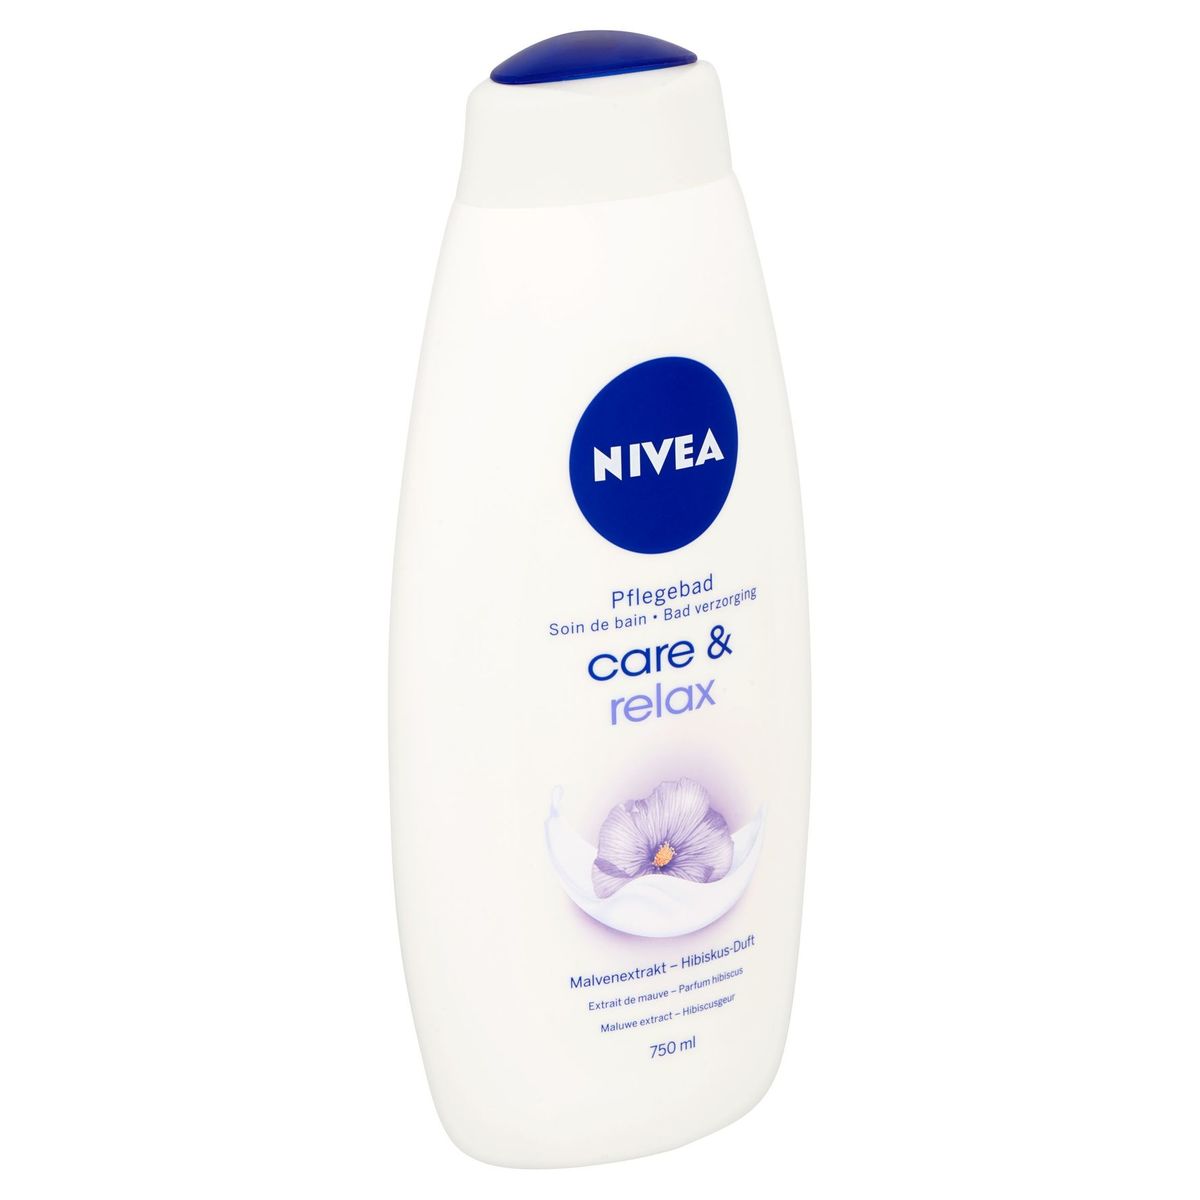 Nivea Bad Verzorging Care & Relax Maluwe Extract - Hibiscusgeur 750 ml